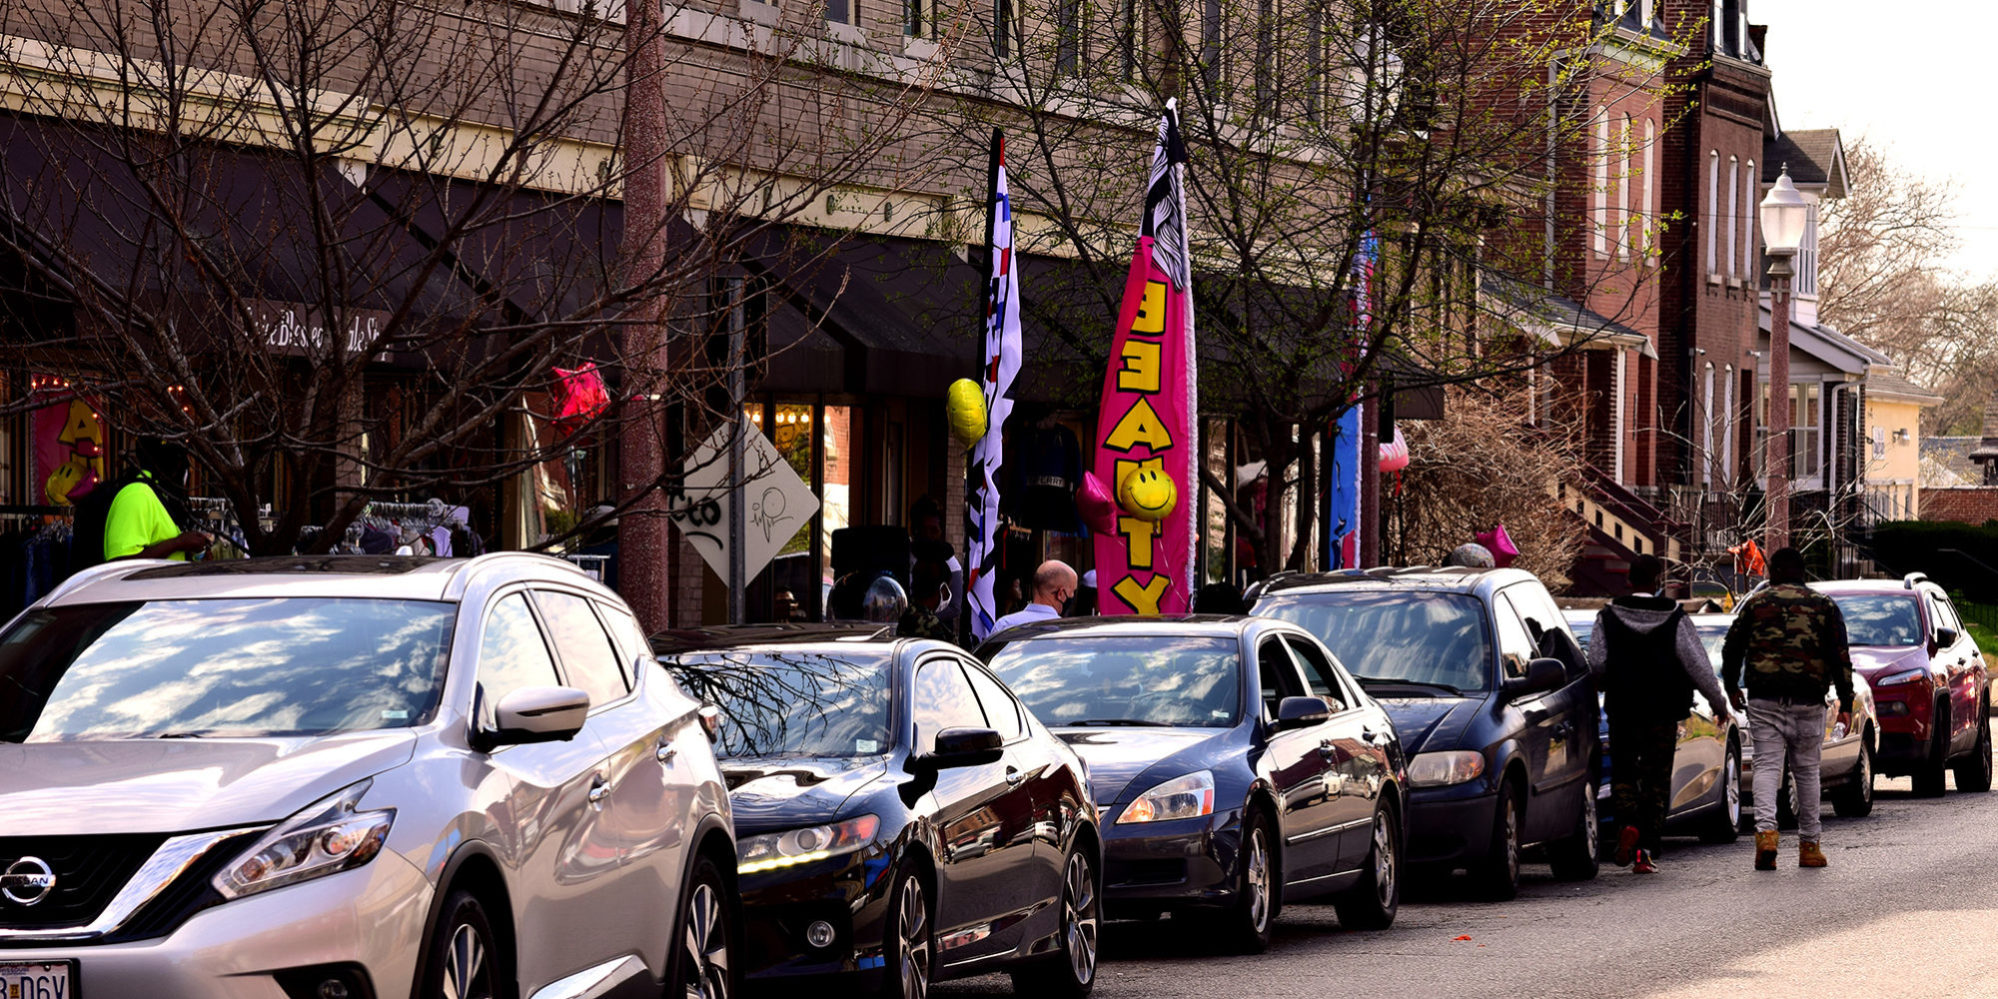 Ulica Meramec tokom proljetne rasprodaje pločnika u centru grada Dutchtown, St. Louis, MO.